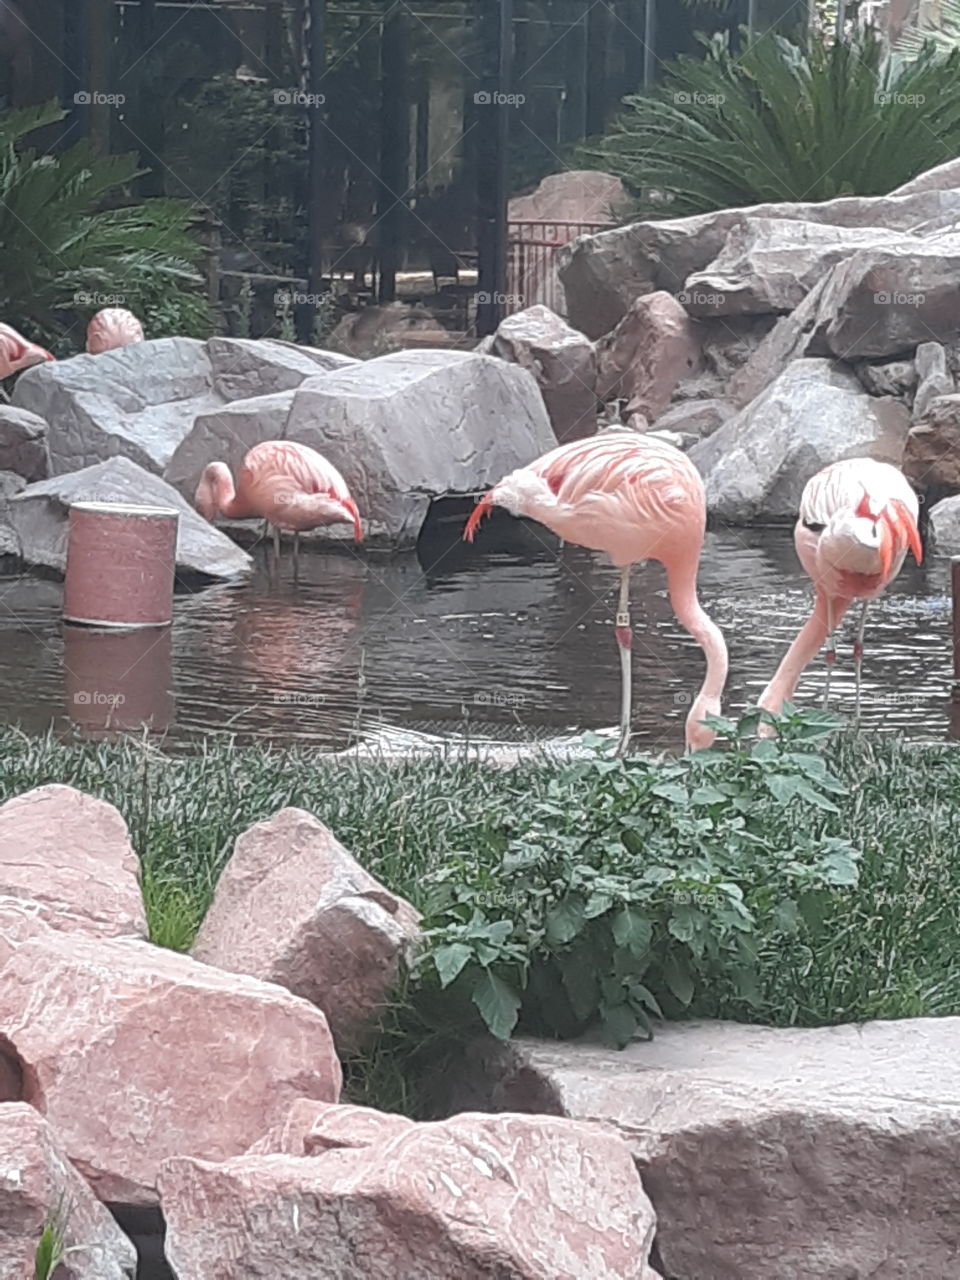 Real pretty Flamingos at Flamingo casino Las Vegas NV